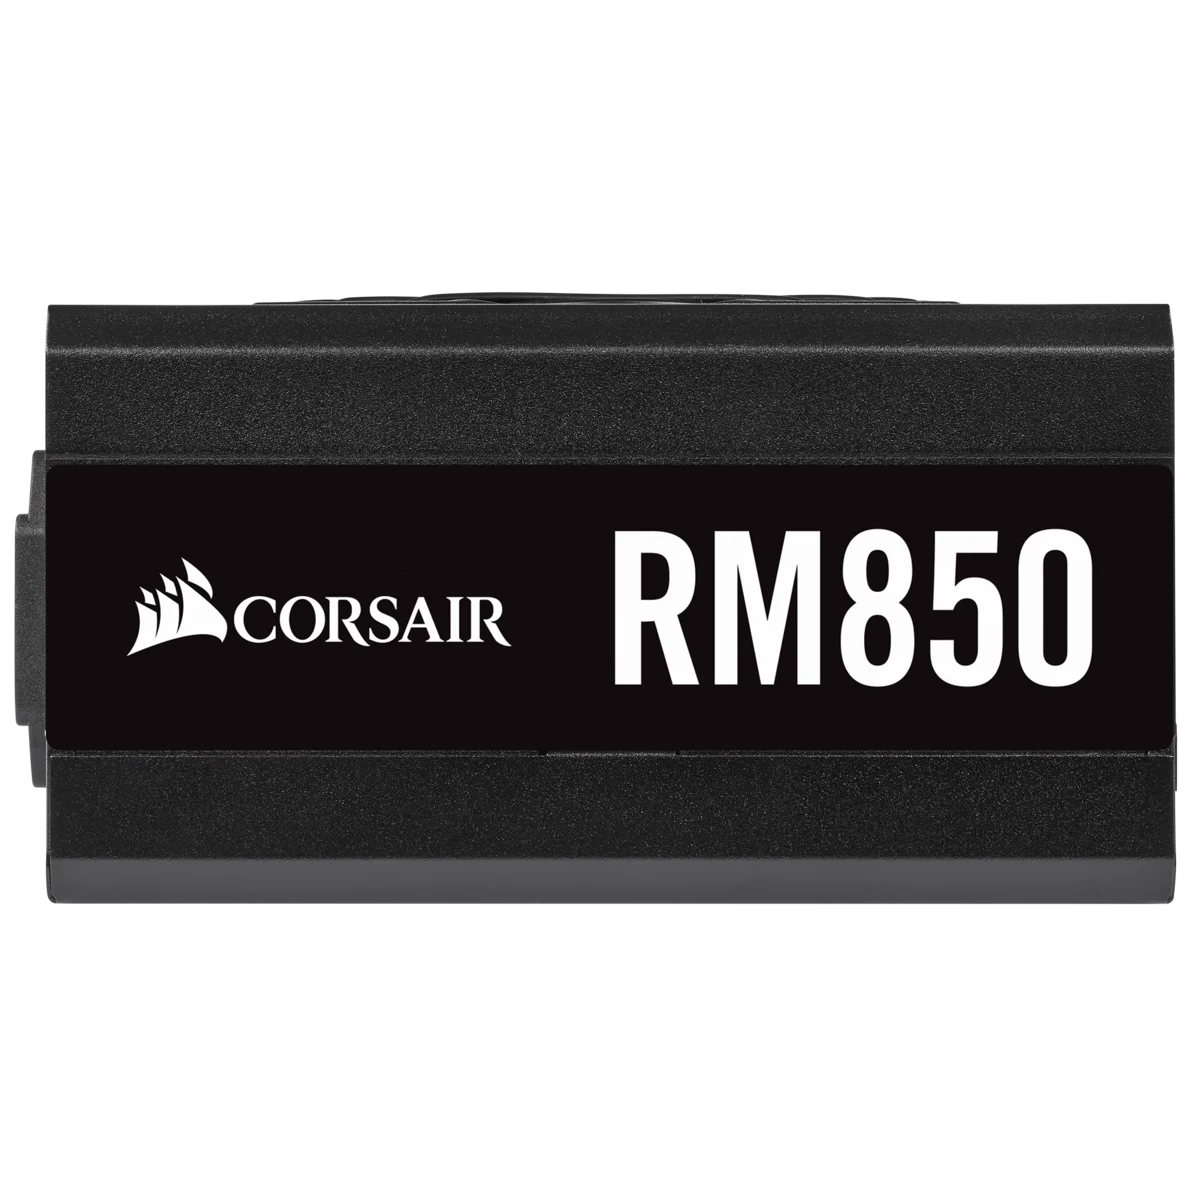 

RM Series RM850 850 Watt 80 PLUS Gold Certified Fully Modular PSU computer power supply High Performance (CN)